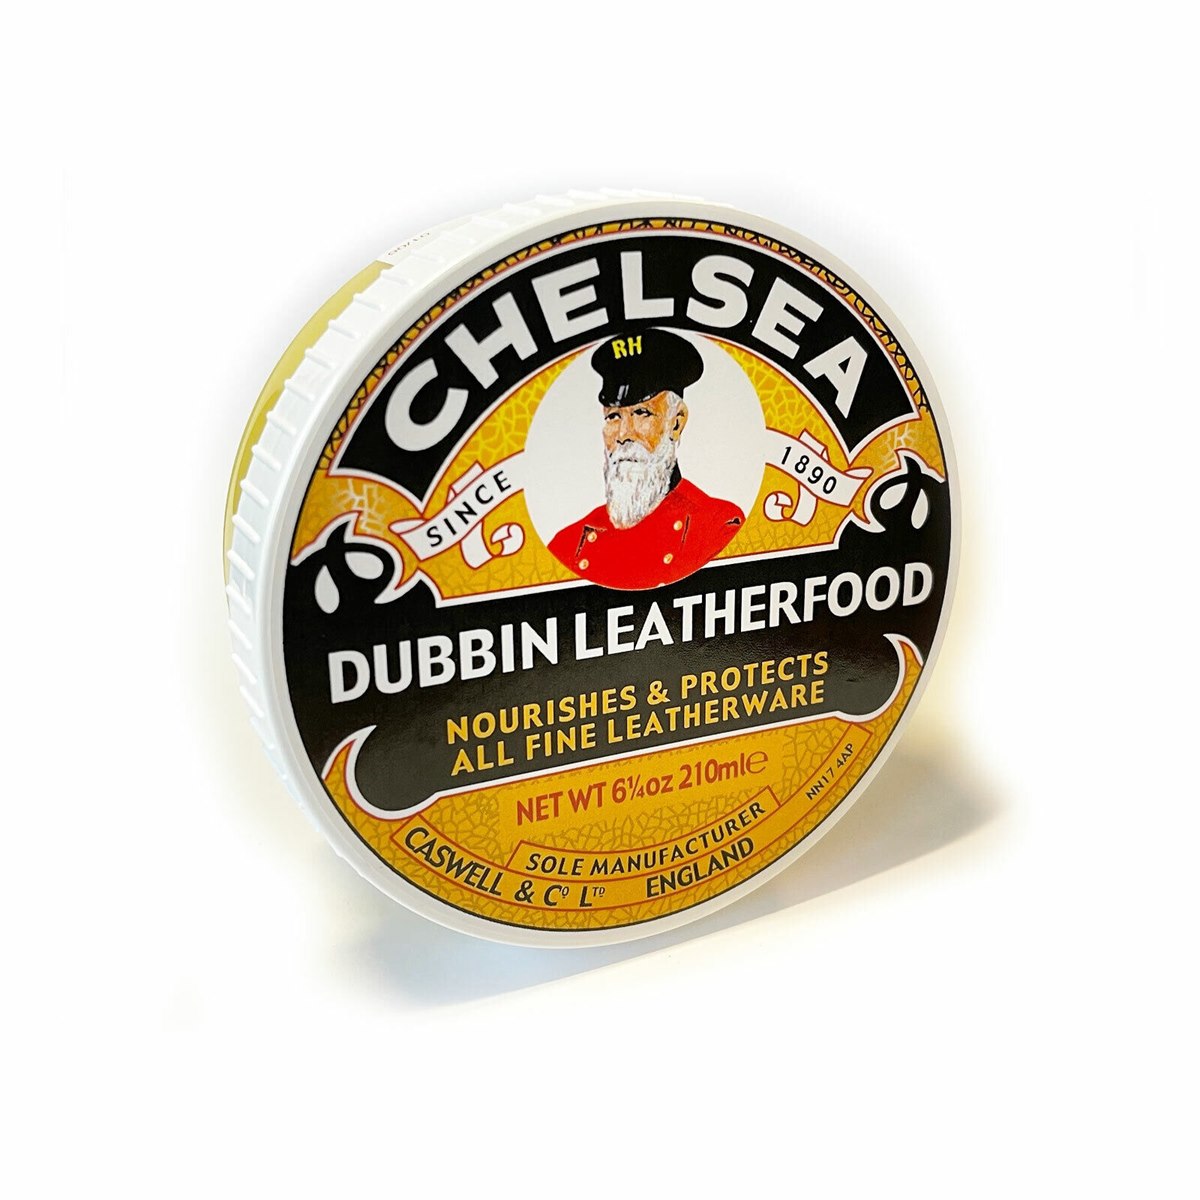 Chelsea Dubbin Leatherfood.